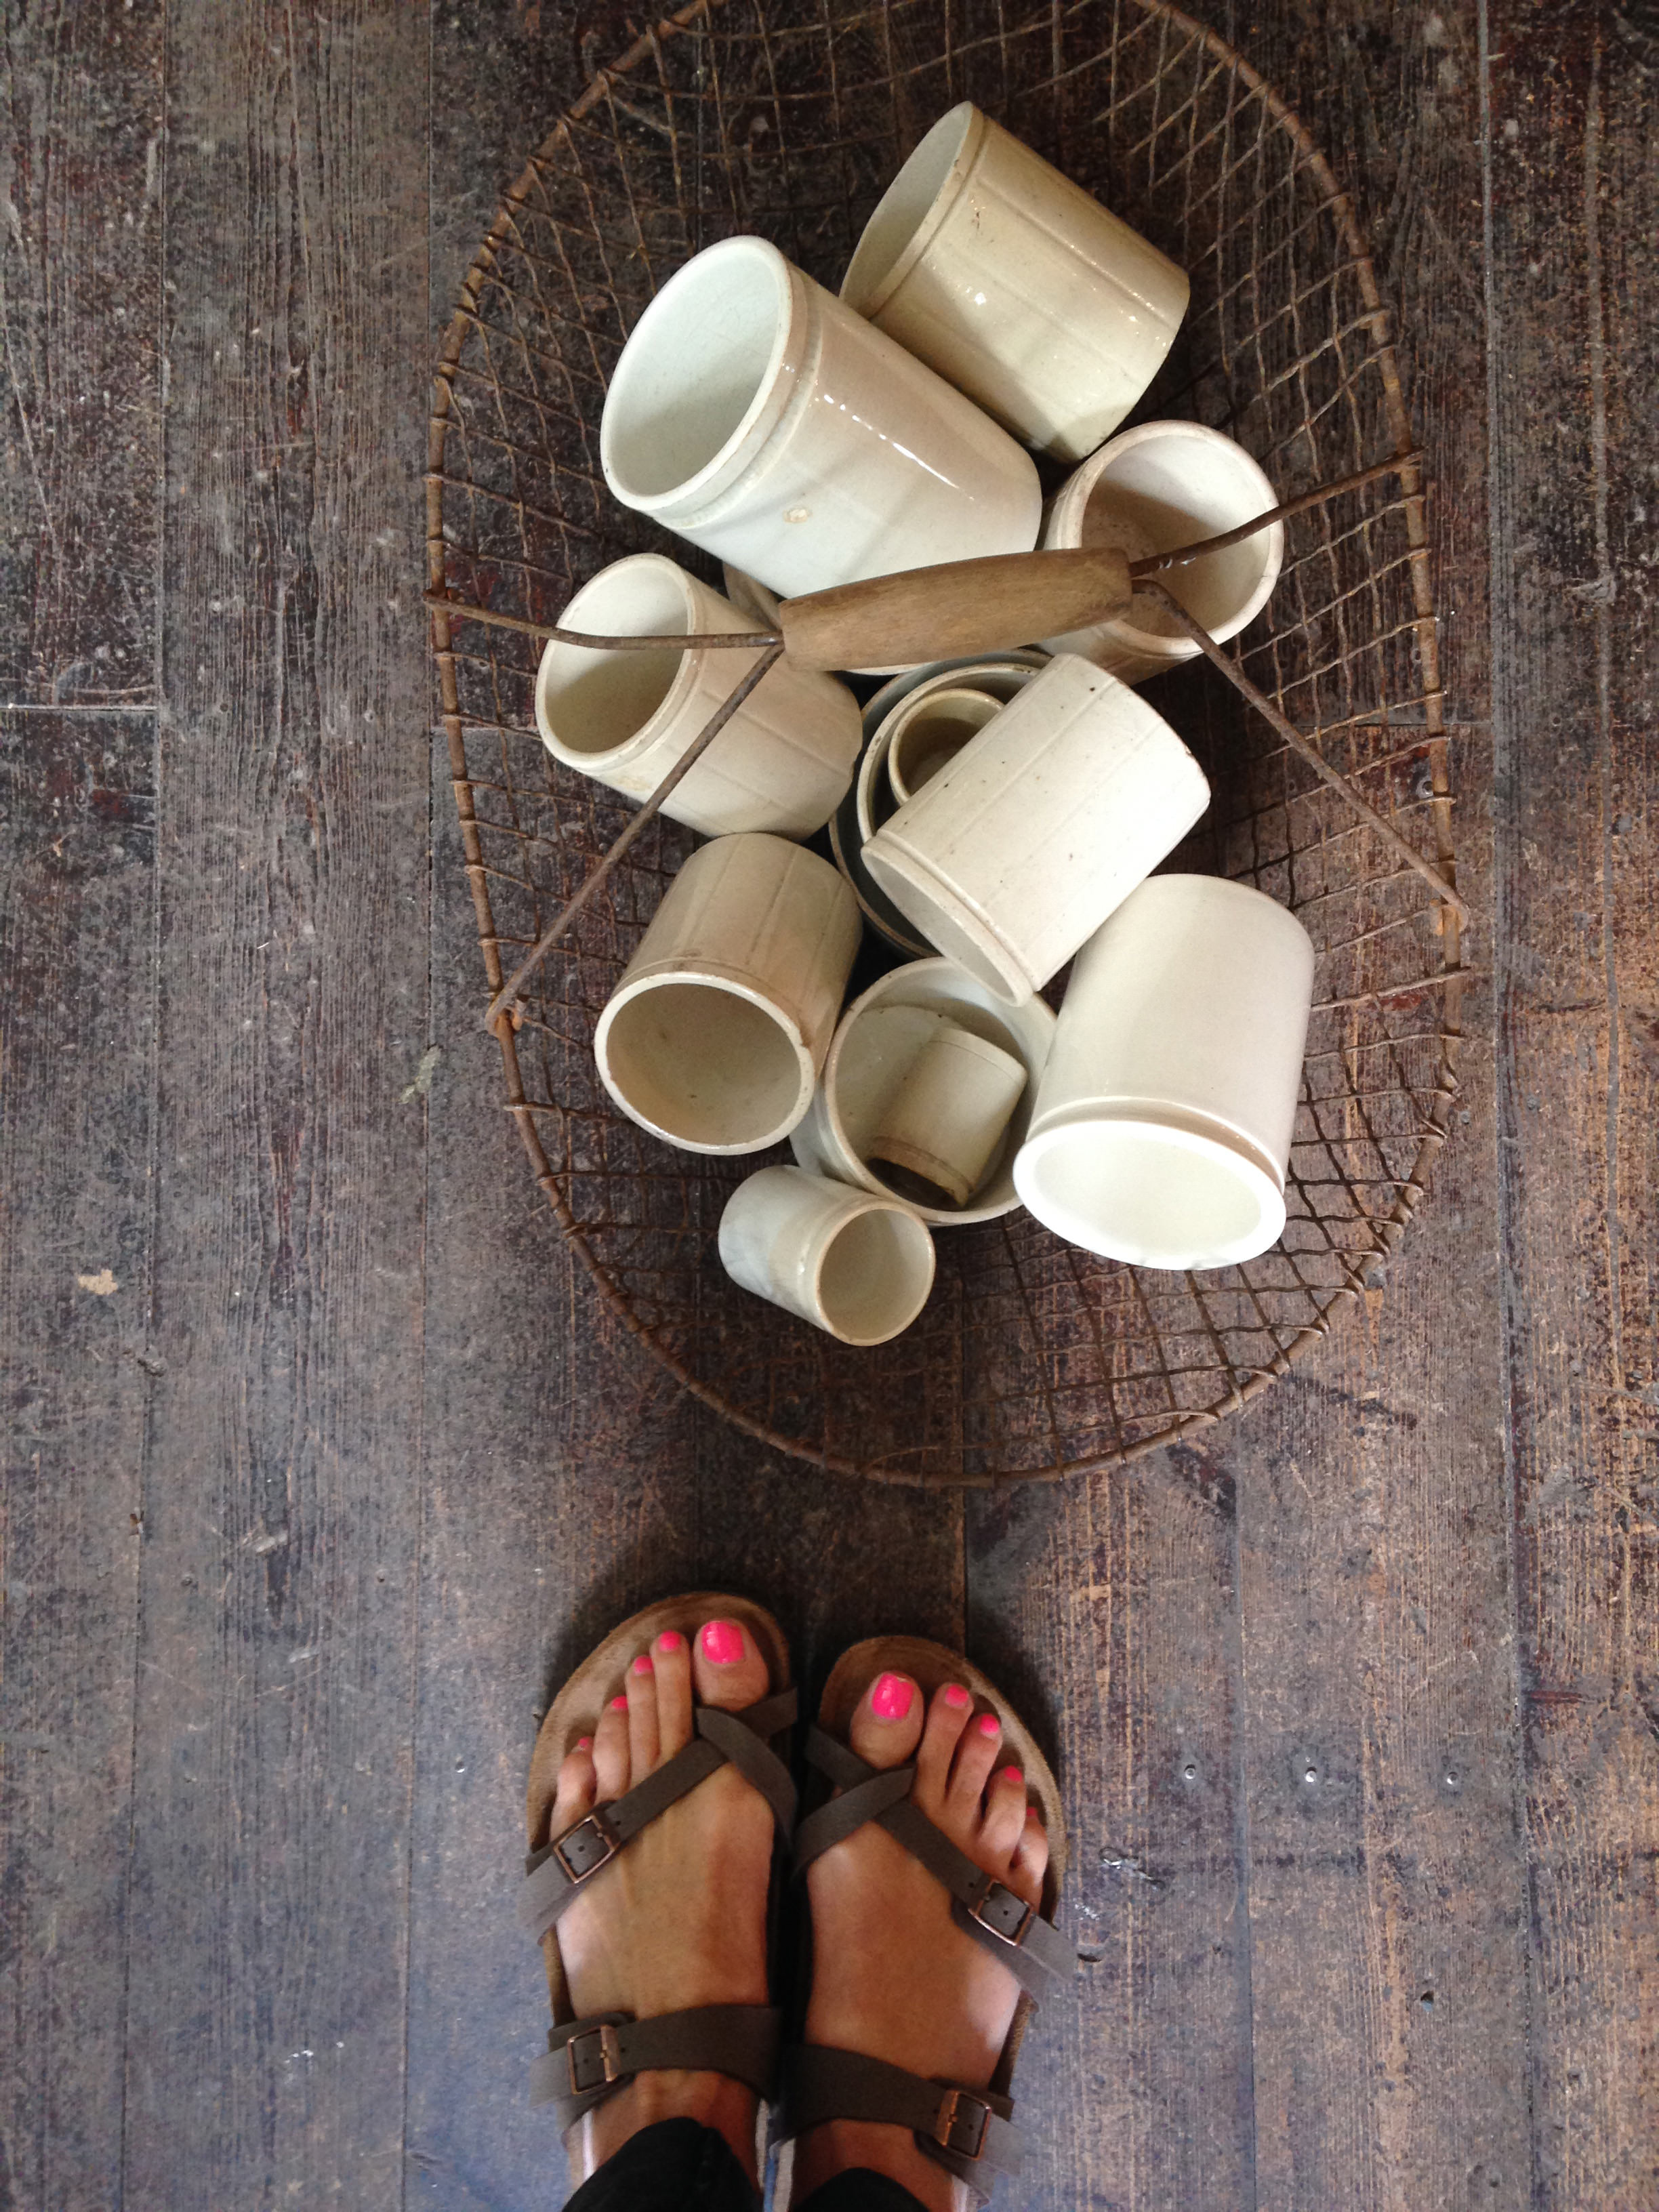 deVOL-kitchens-Helen Parker-Birkenstocks-shoes-floorboards-antiques-gifts-wire basket-mugs-Old-French mustard-simplicity-beautiful-antique-set-mugs-